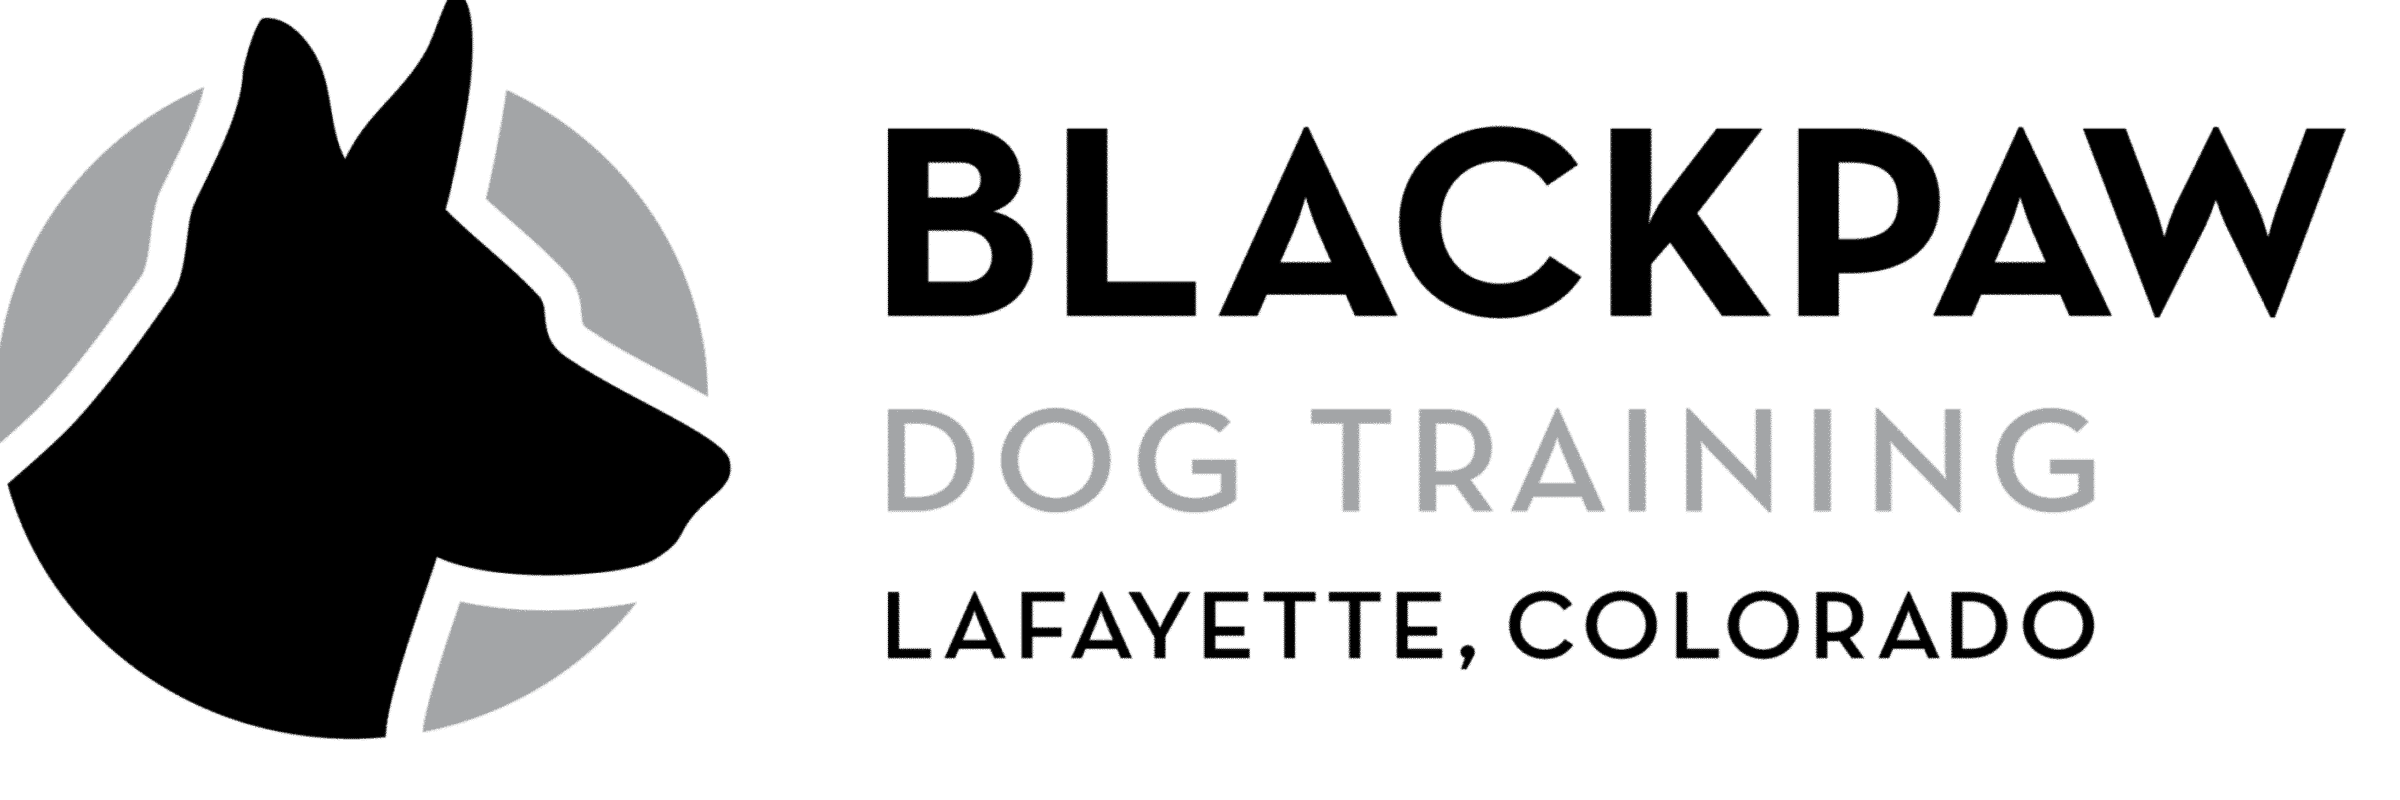 BlackPaw Dog Training